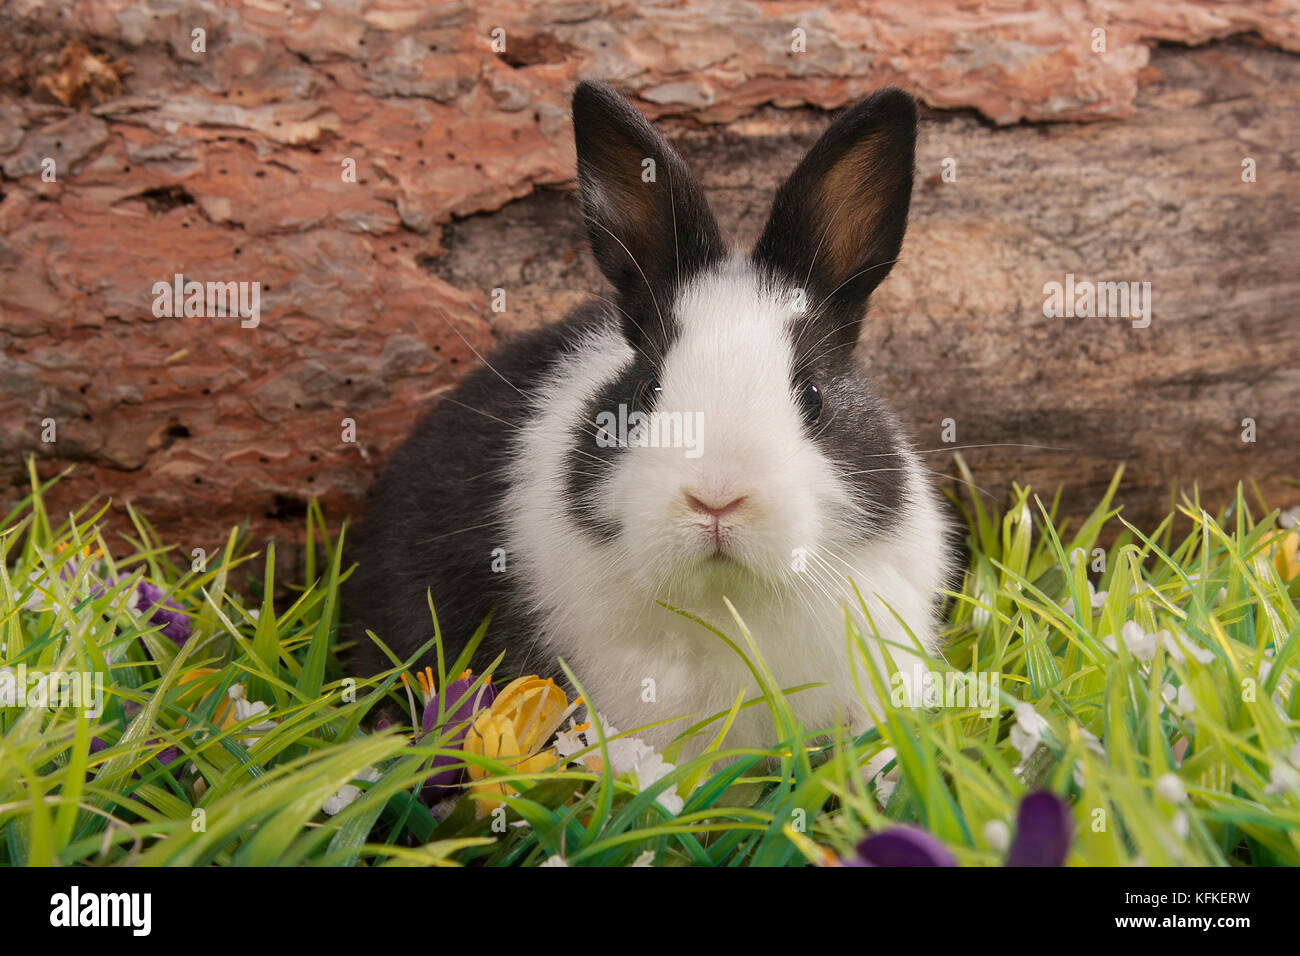 black and white dwarf rabbit